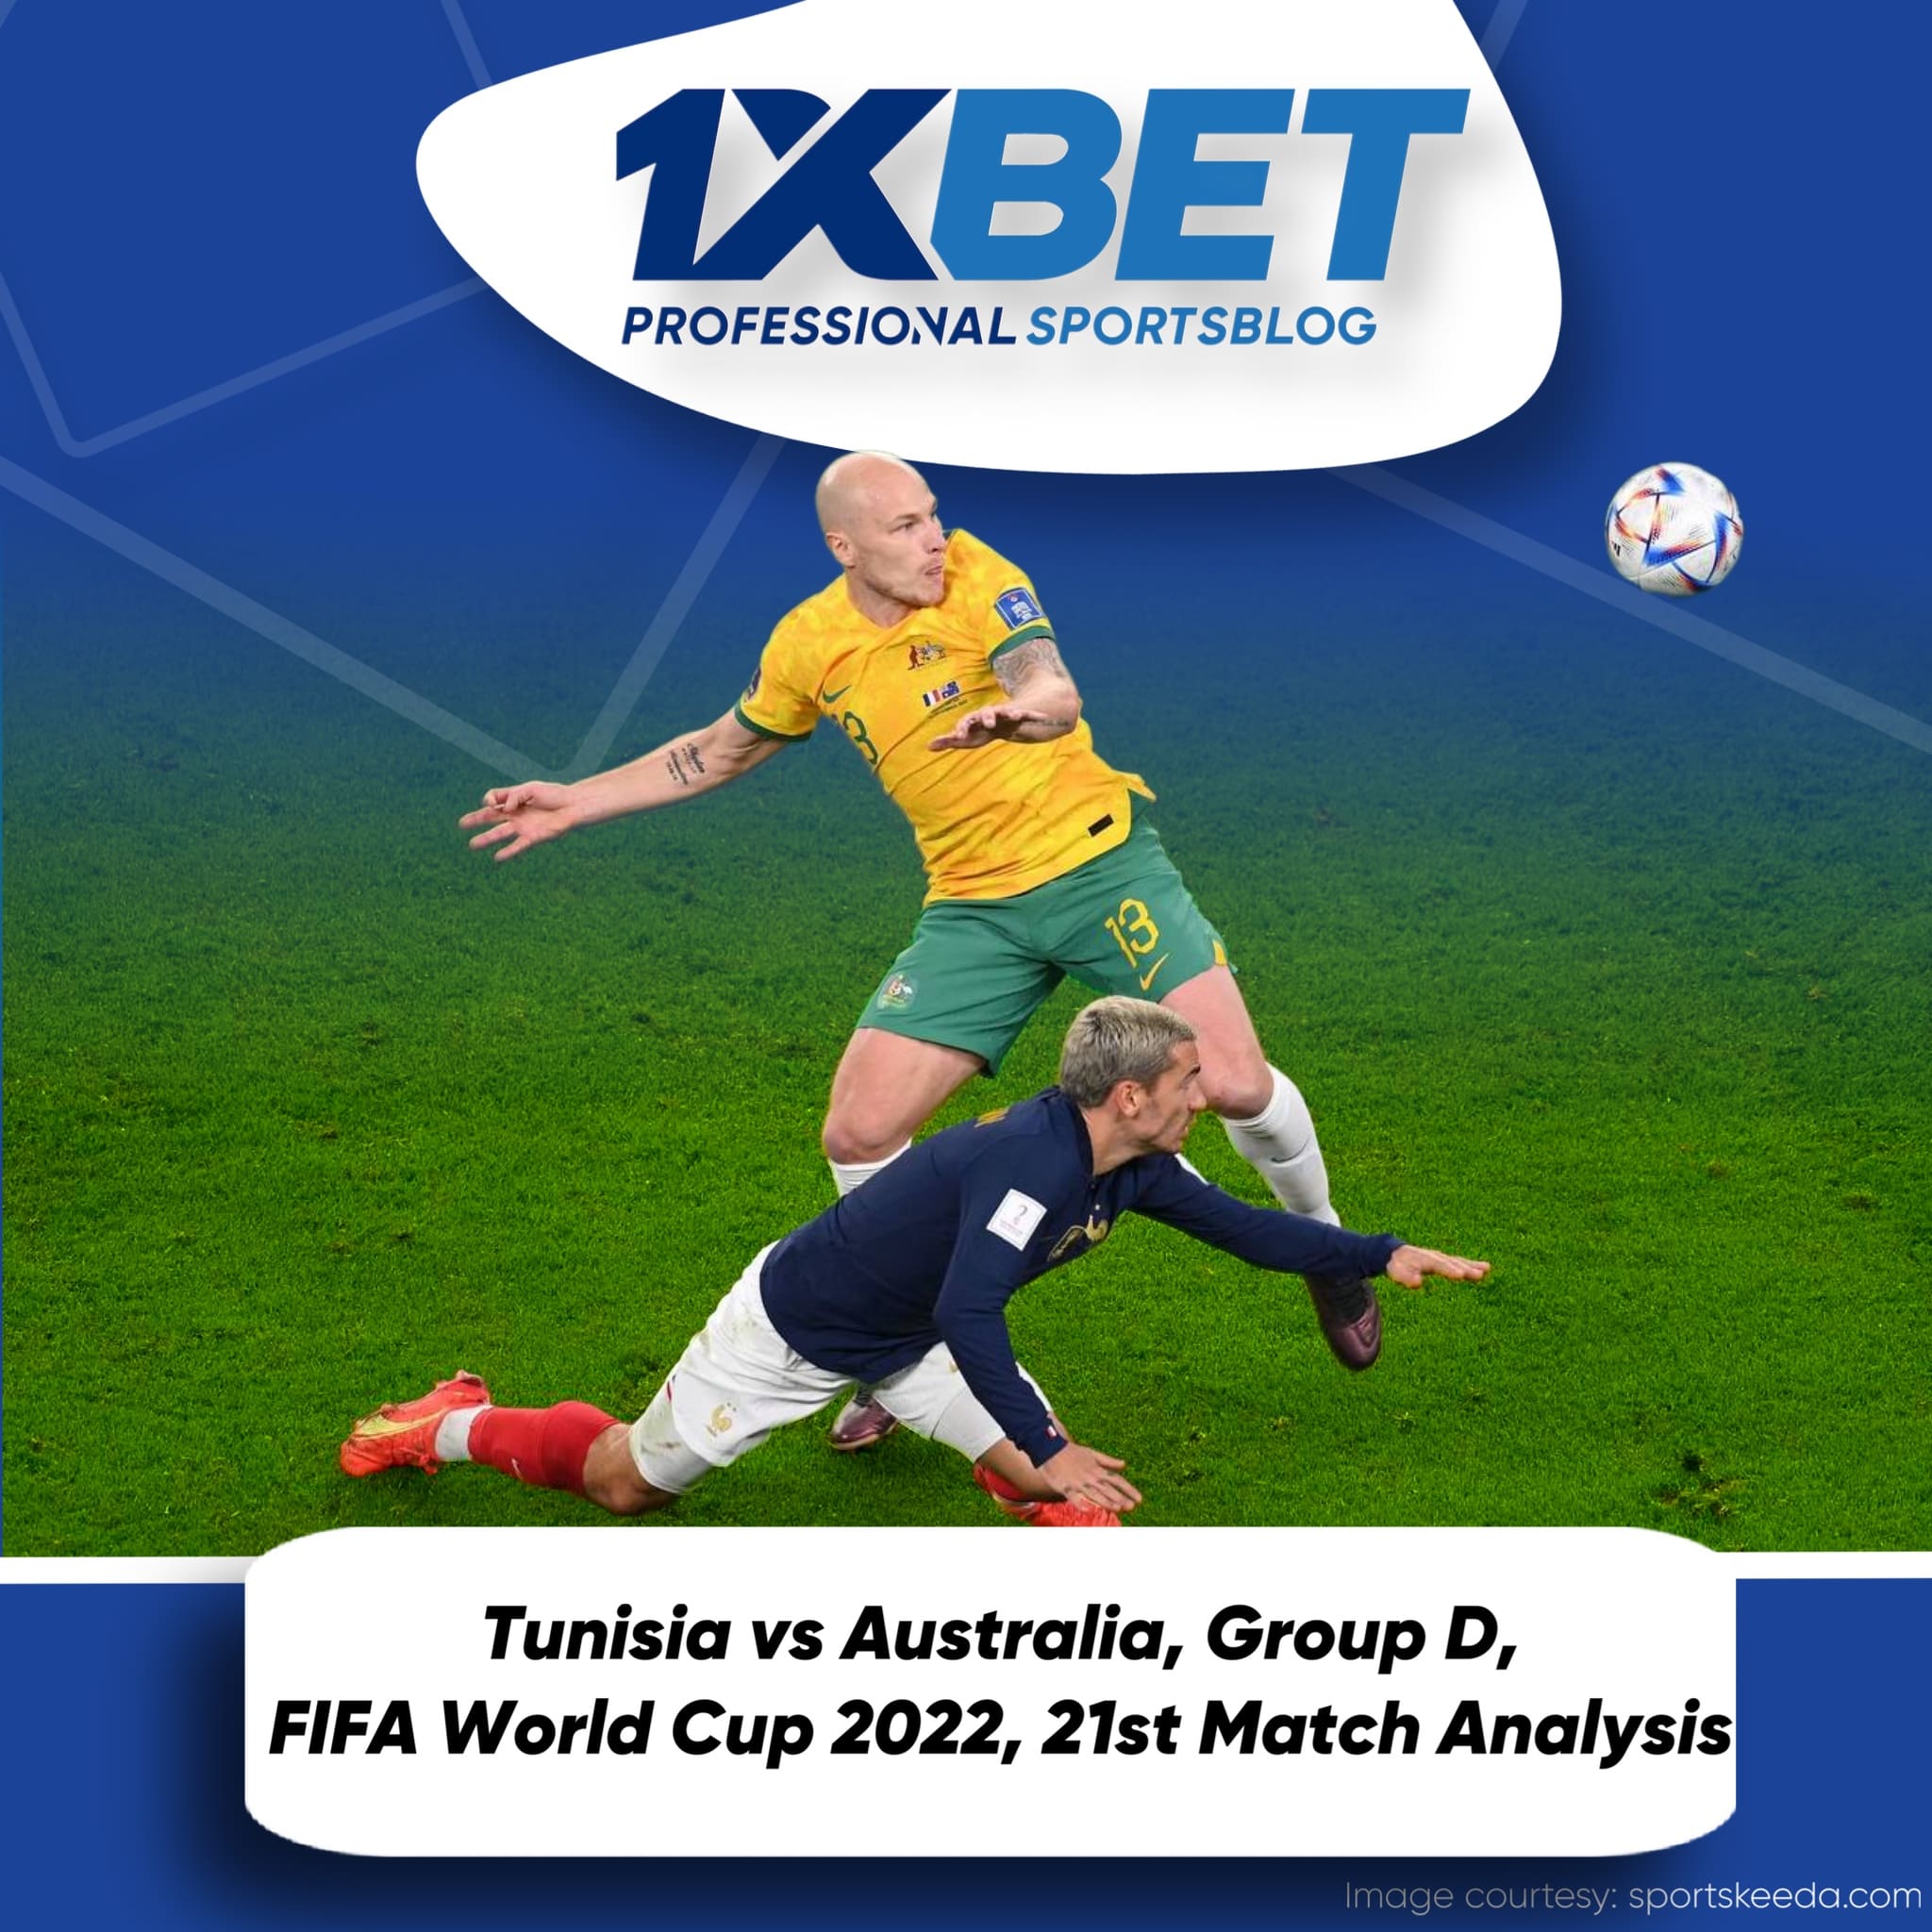 Tunisia vs Australia, Group D, FIFA World Cup 2022, 21st Match Analysis